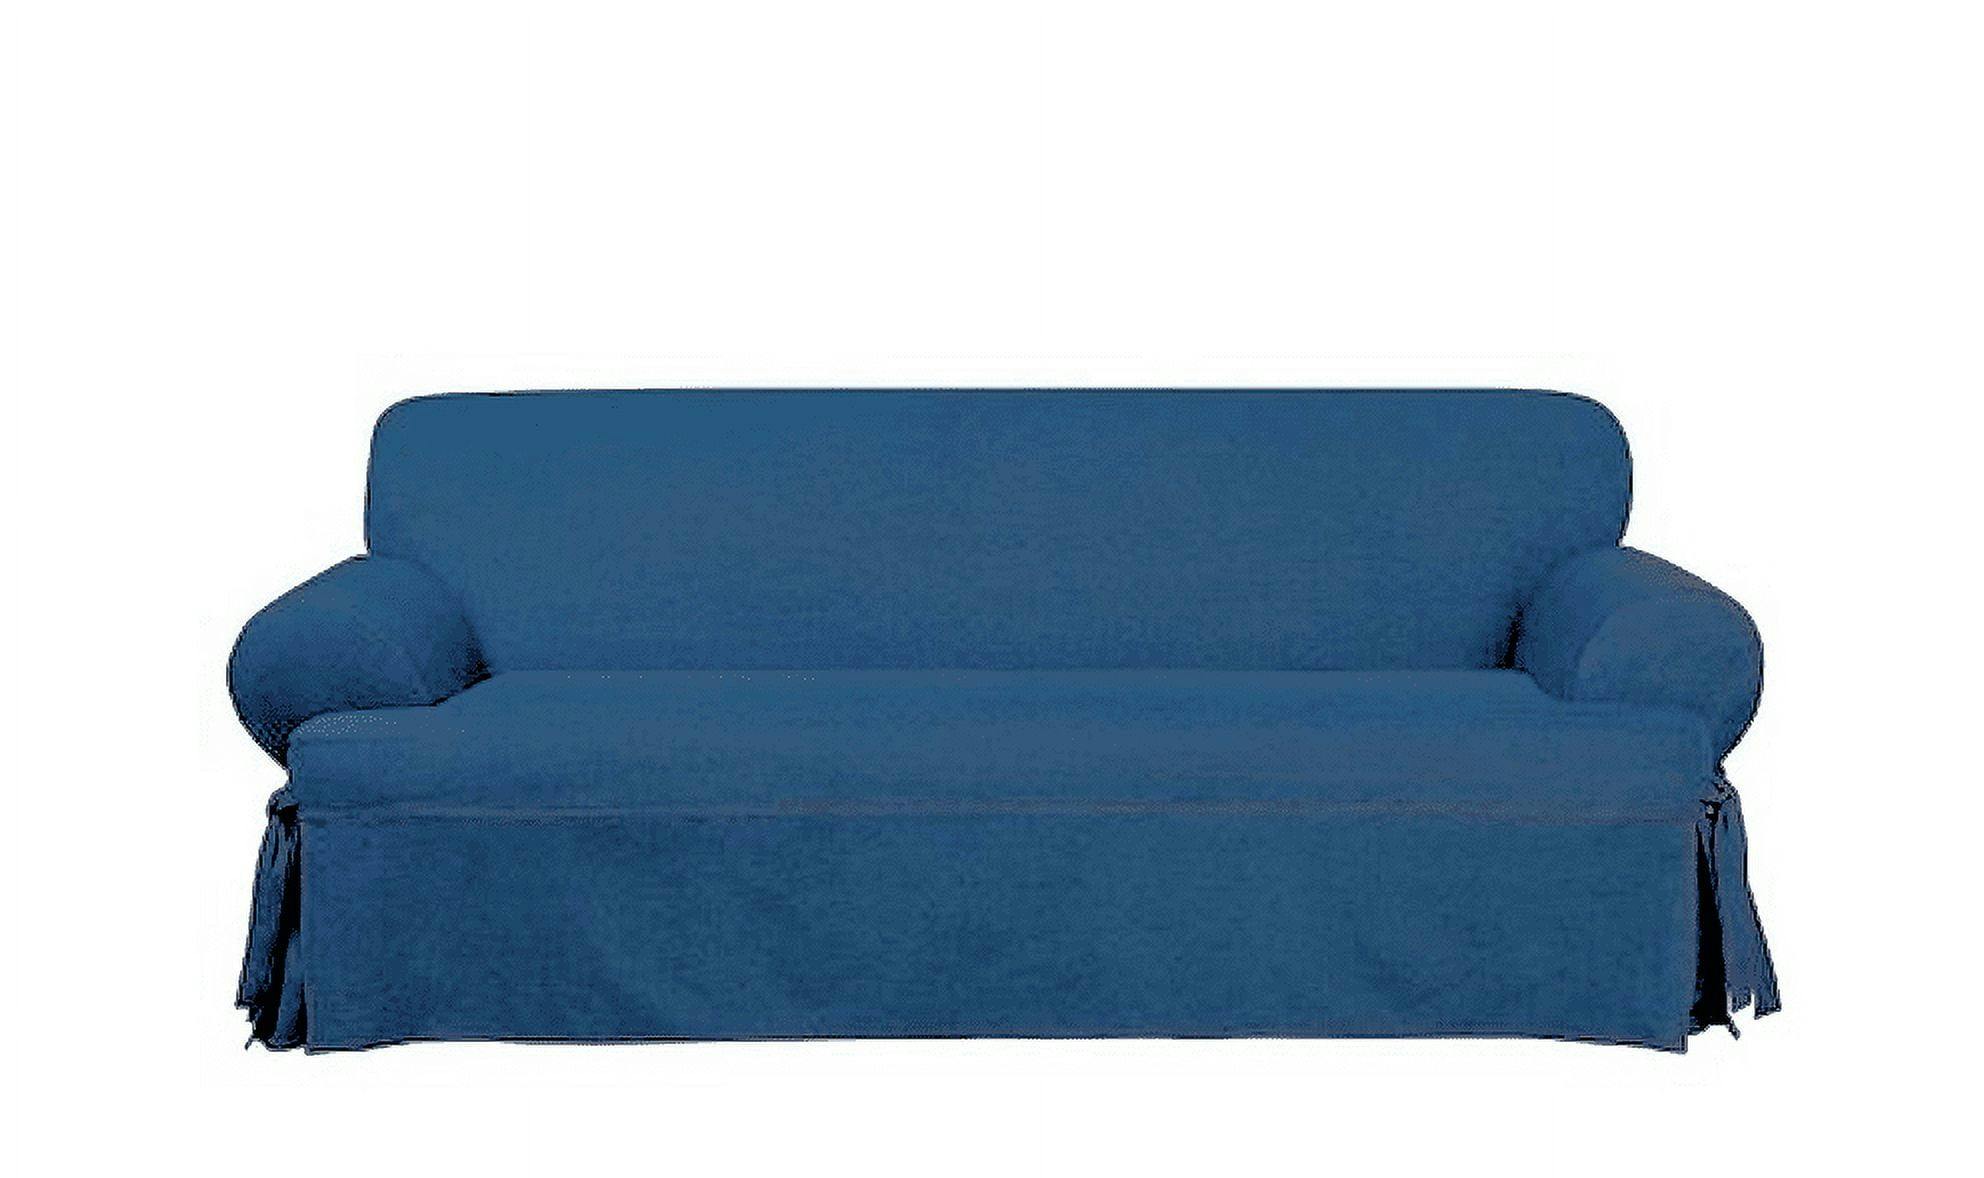 Indigo Denim Relaxed Fit T-Cushion Loveseat Slipcover